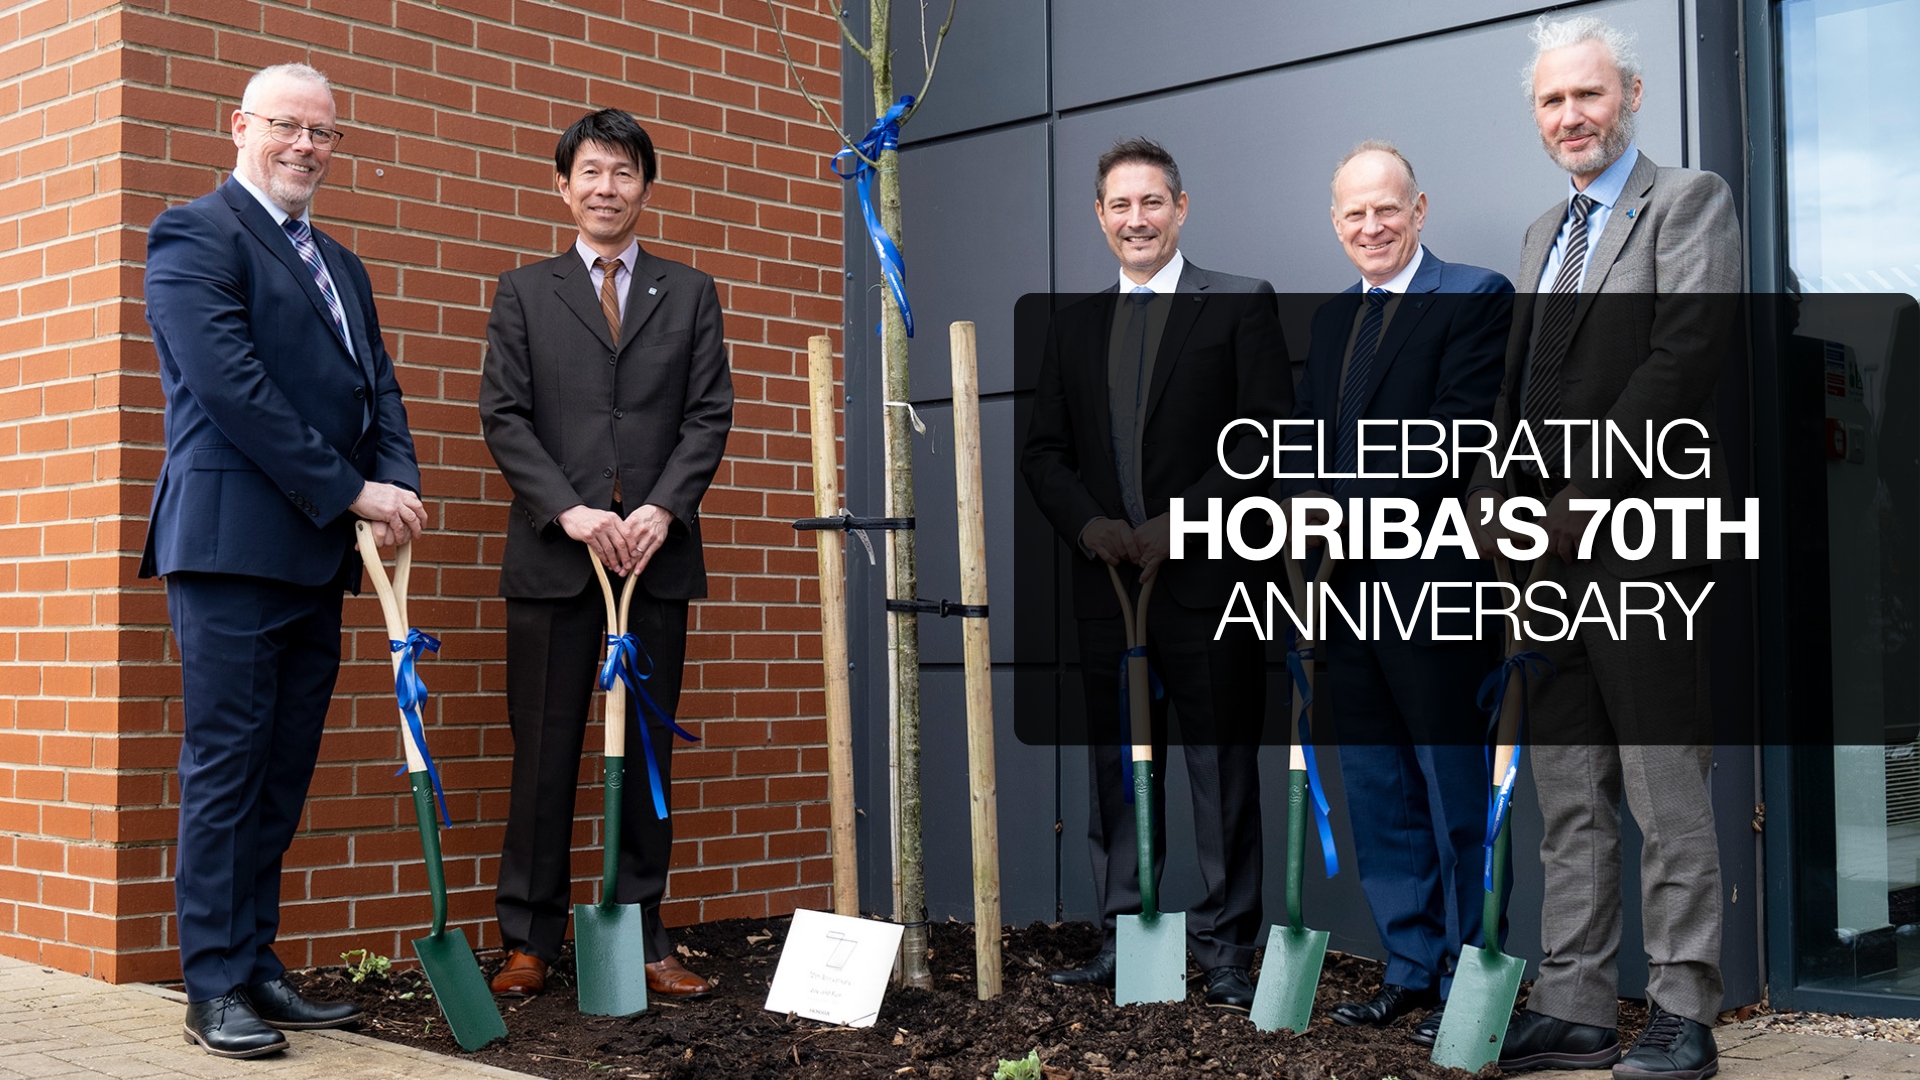 Celebrating HORIBAs 70th Anniversary